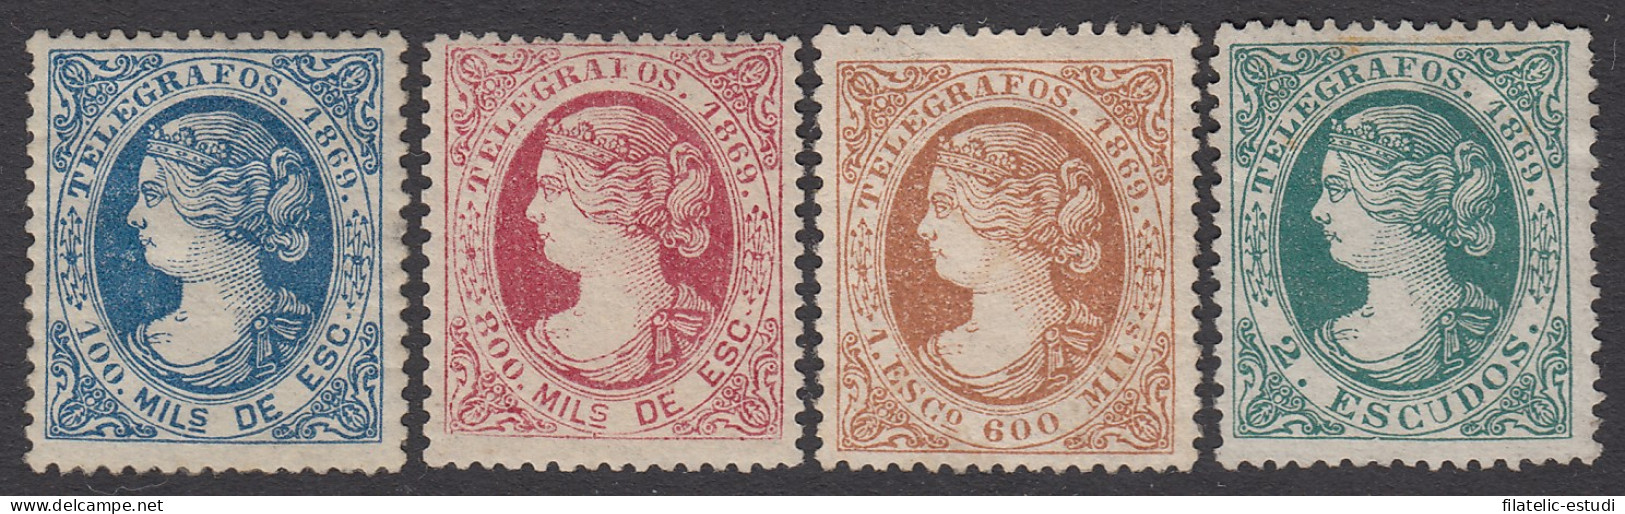 España Spain Telégrafos 26/29 1869 Isabel II  MH - Fiscal-postal